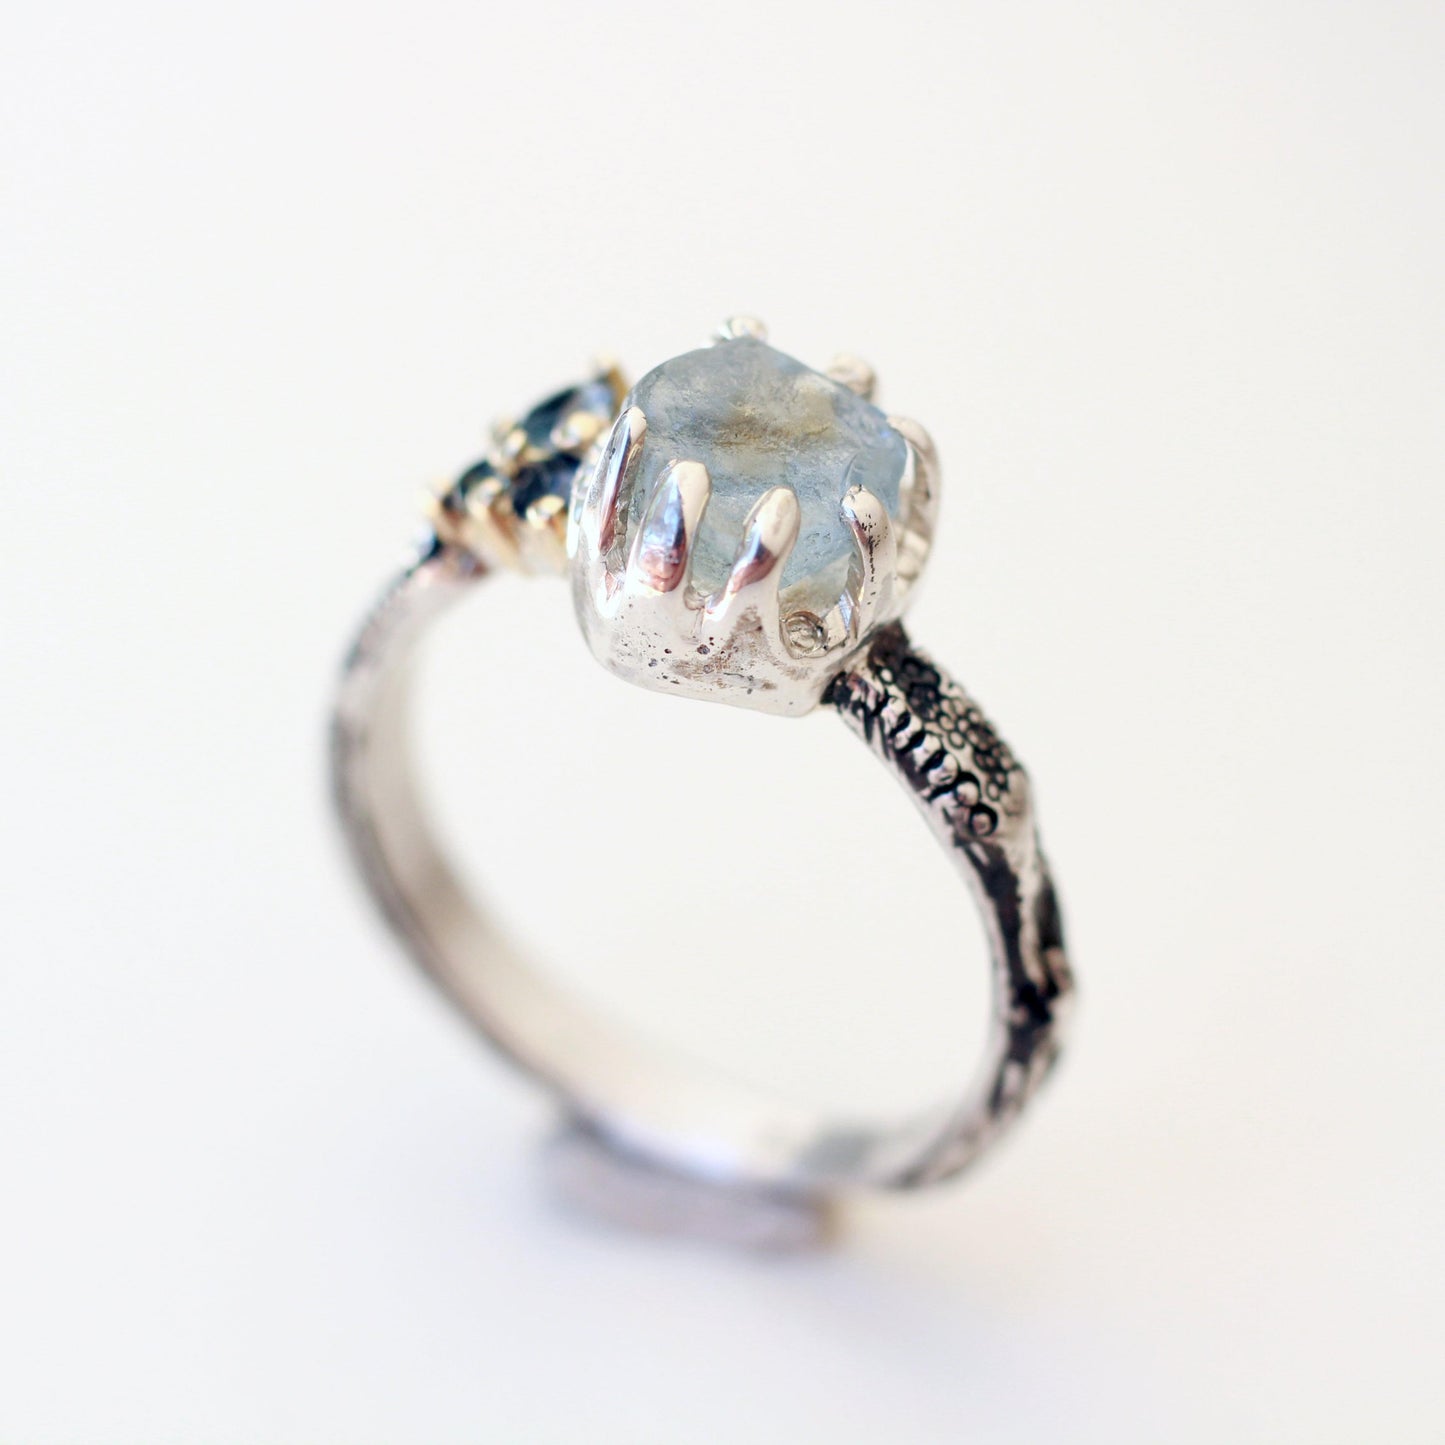 Apo Ring - Raw Montana sapphire ring